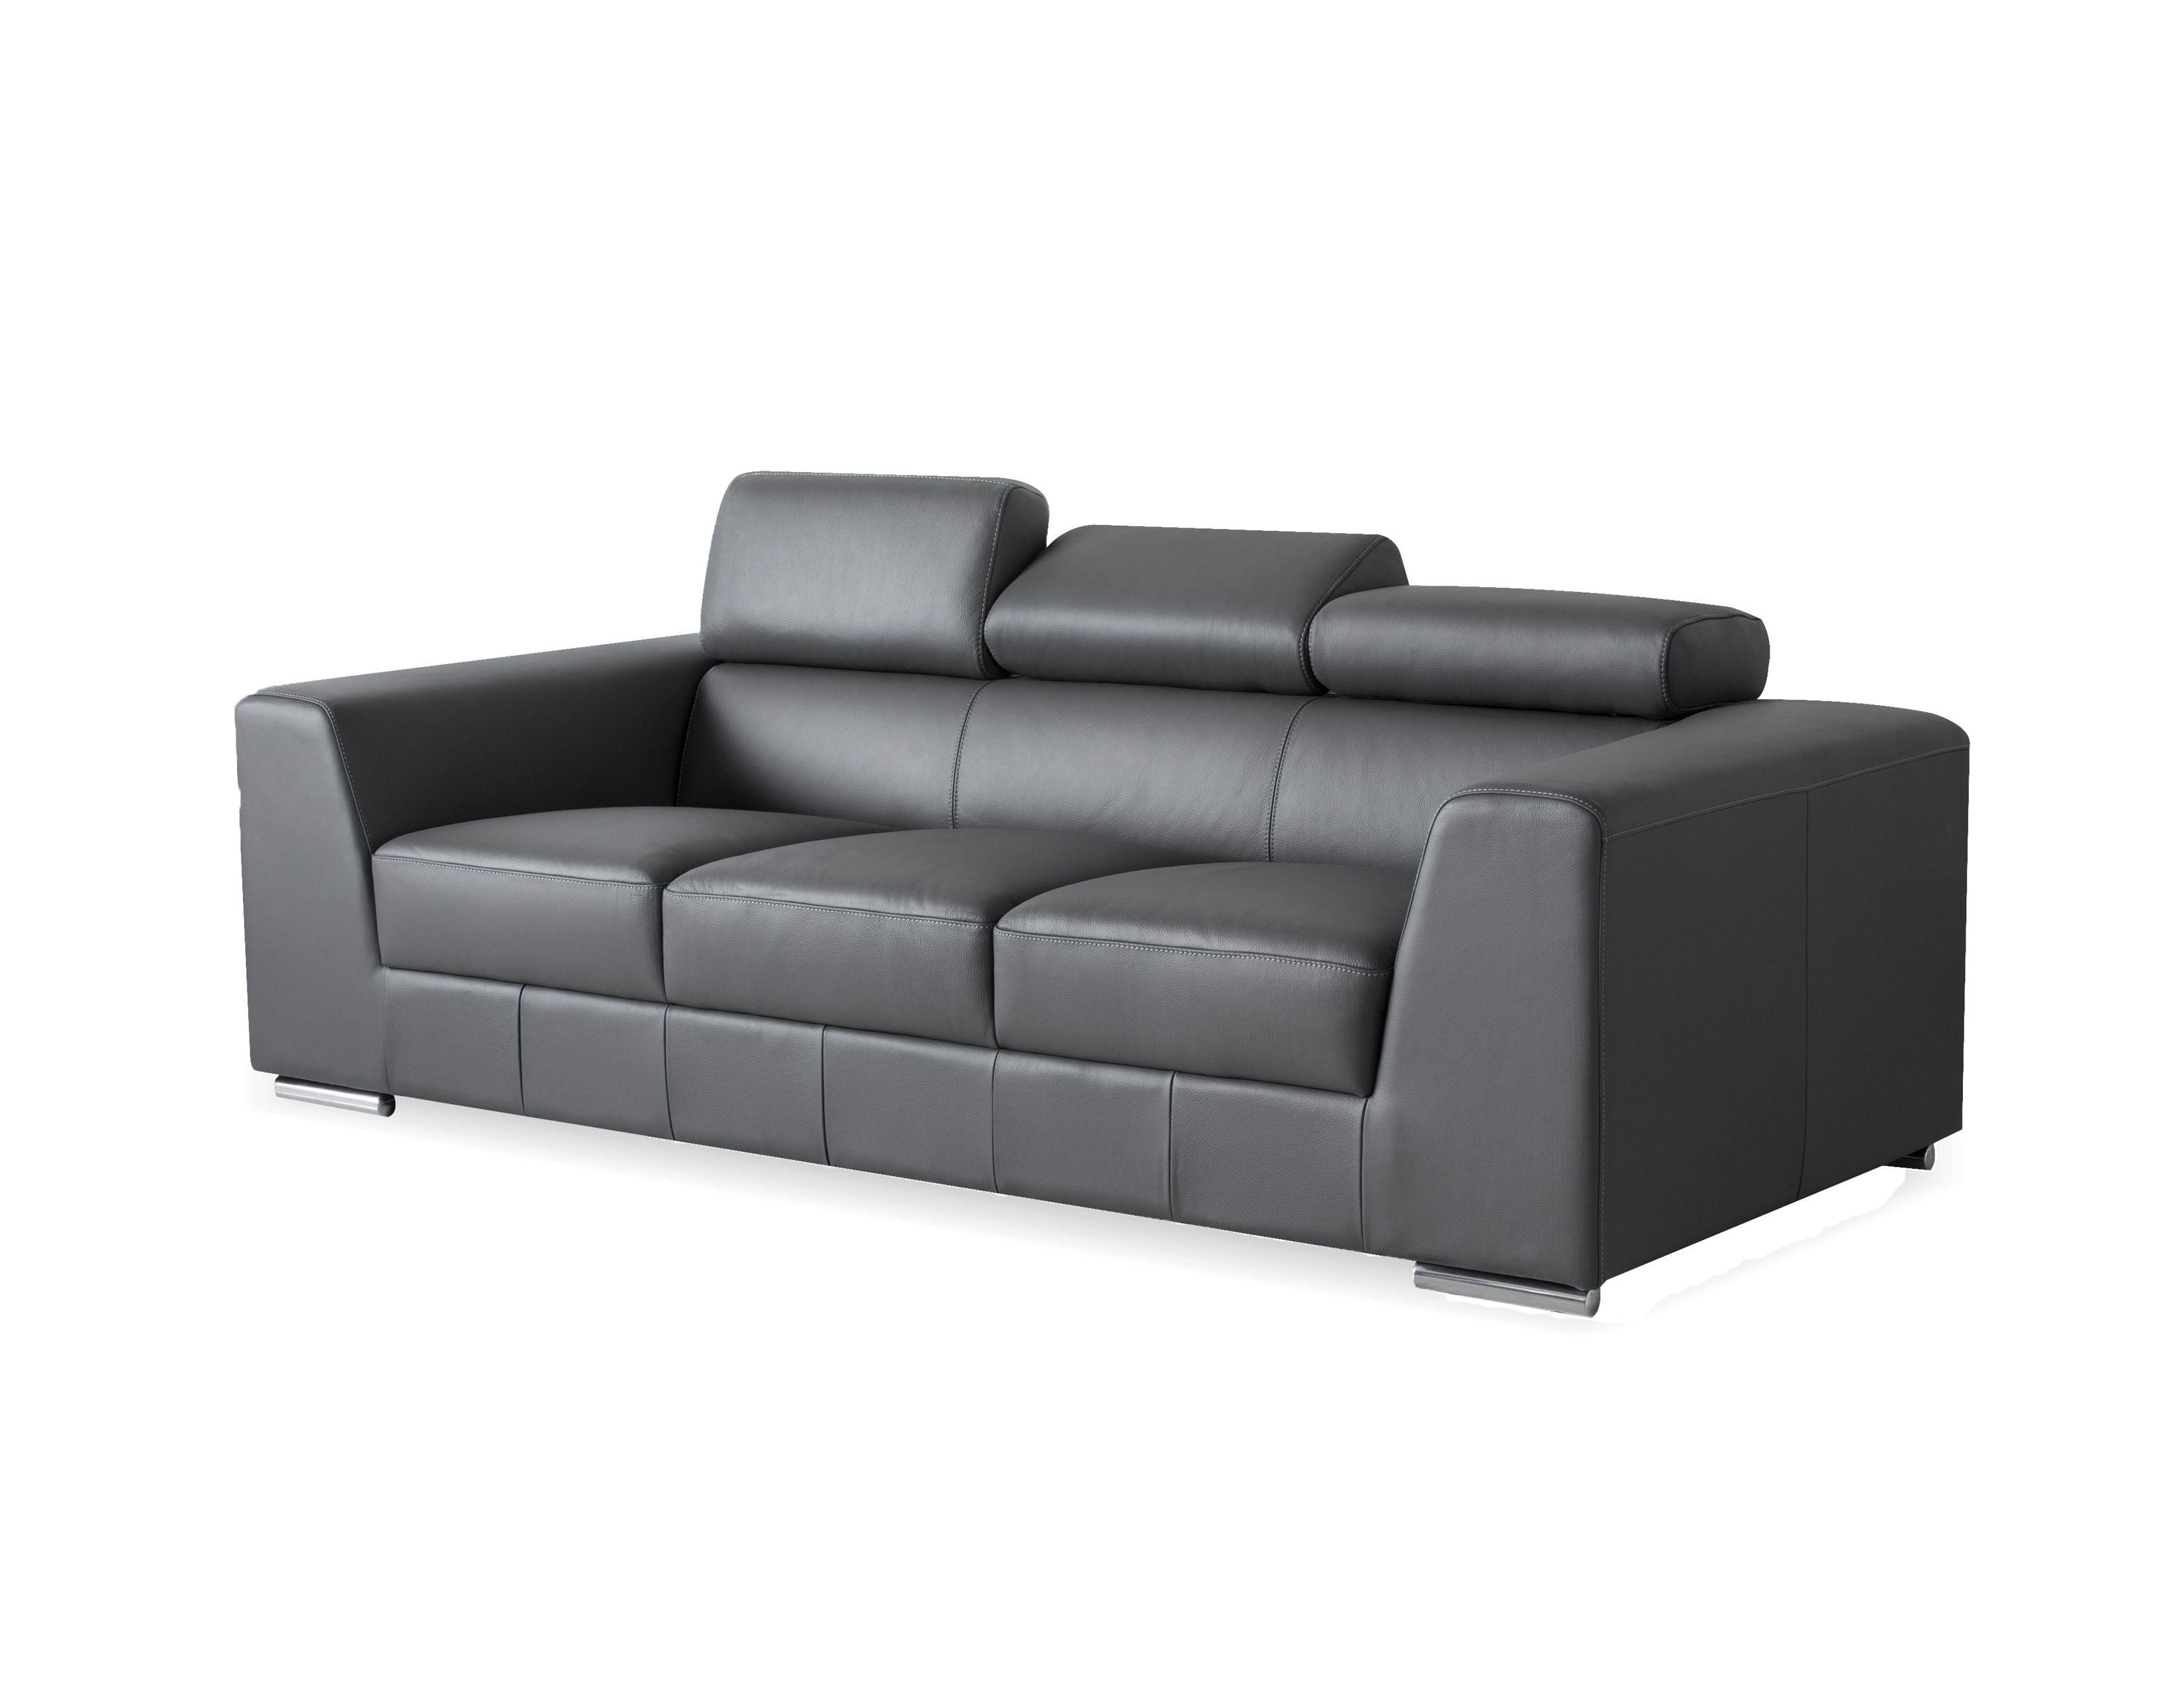 ICON Leather Sofa in Dark Grey